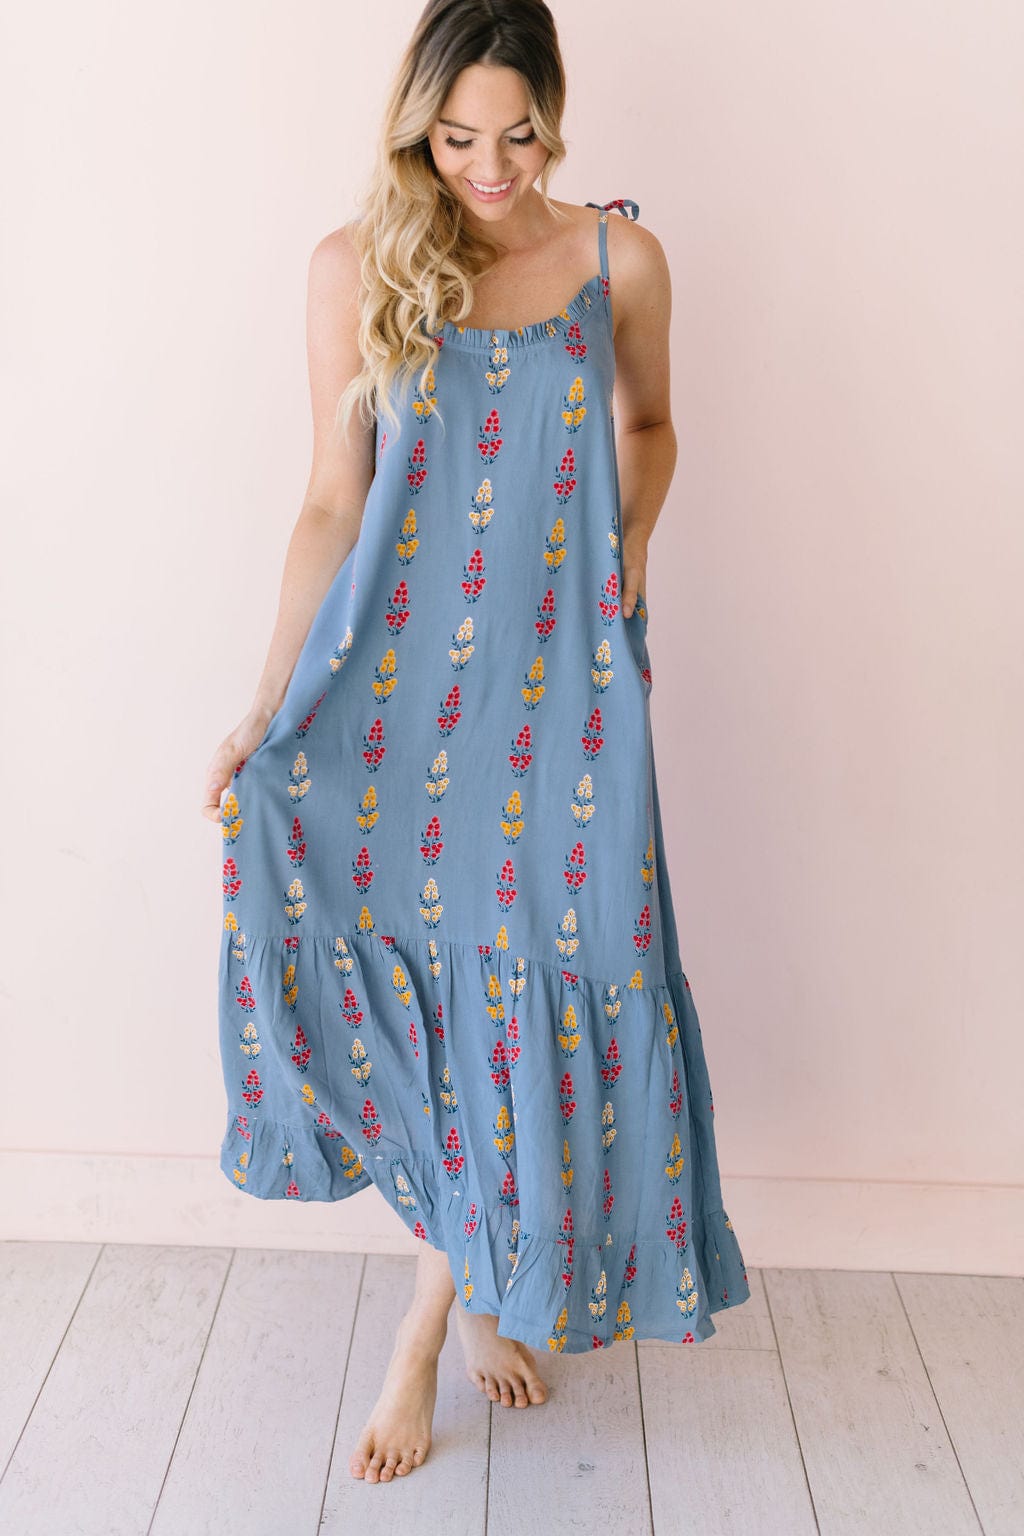 Sunshine Tienda® Floral Ashley Dress